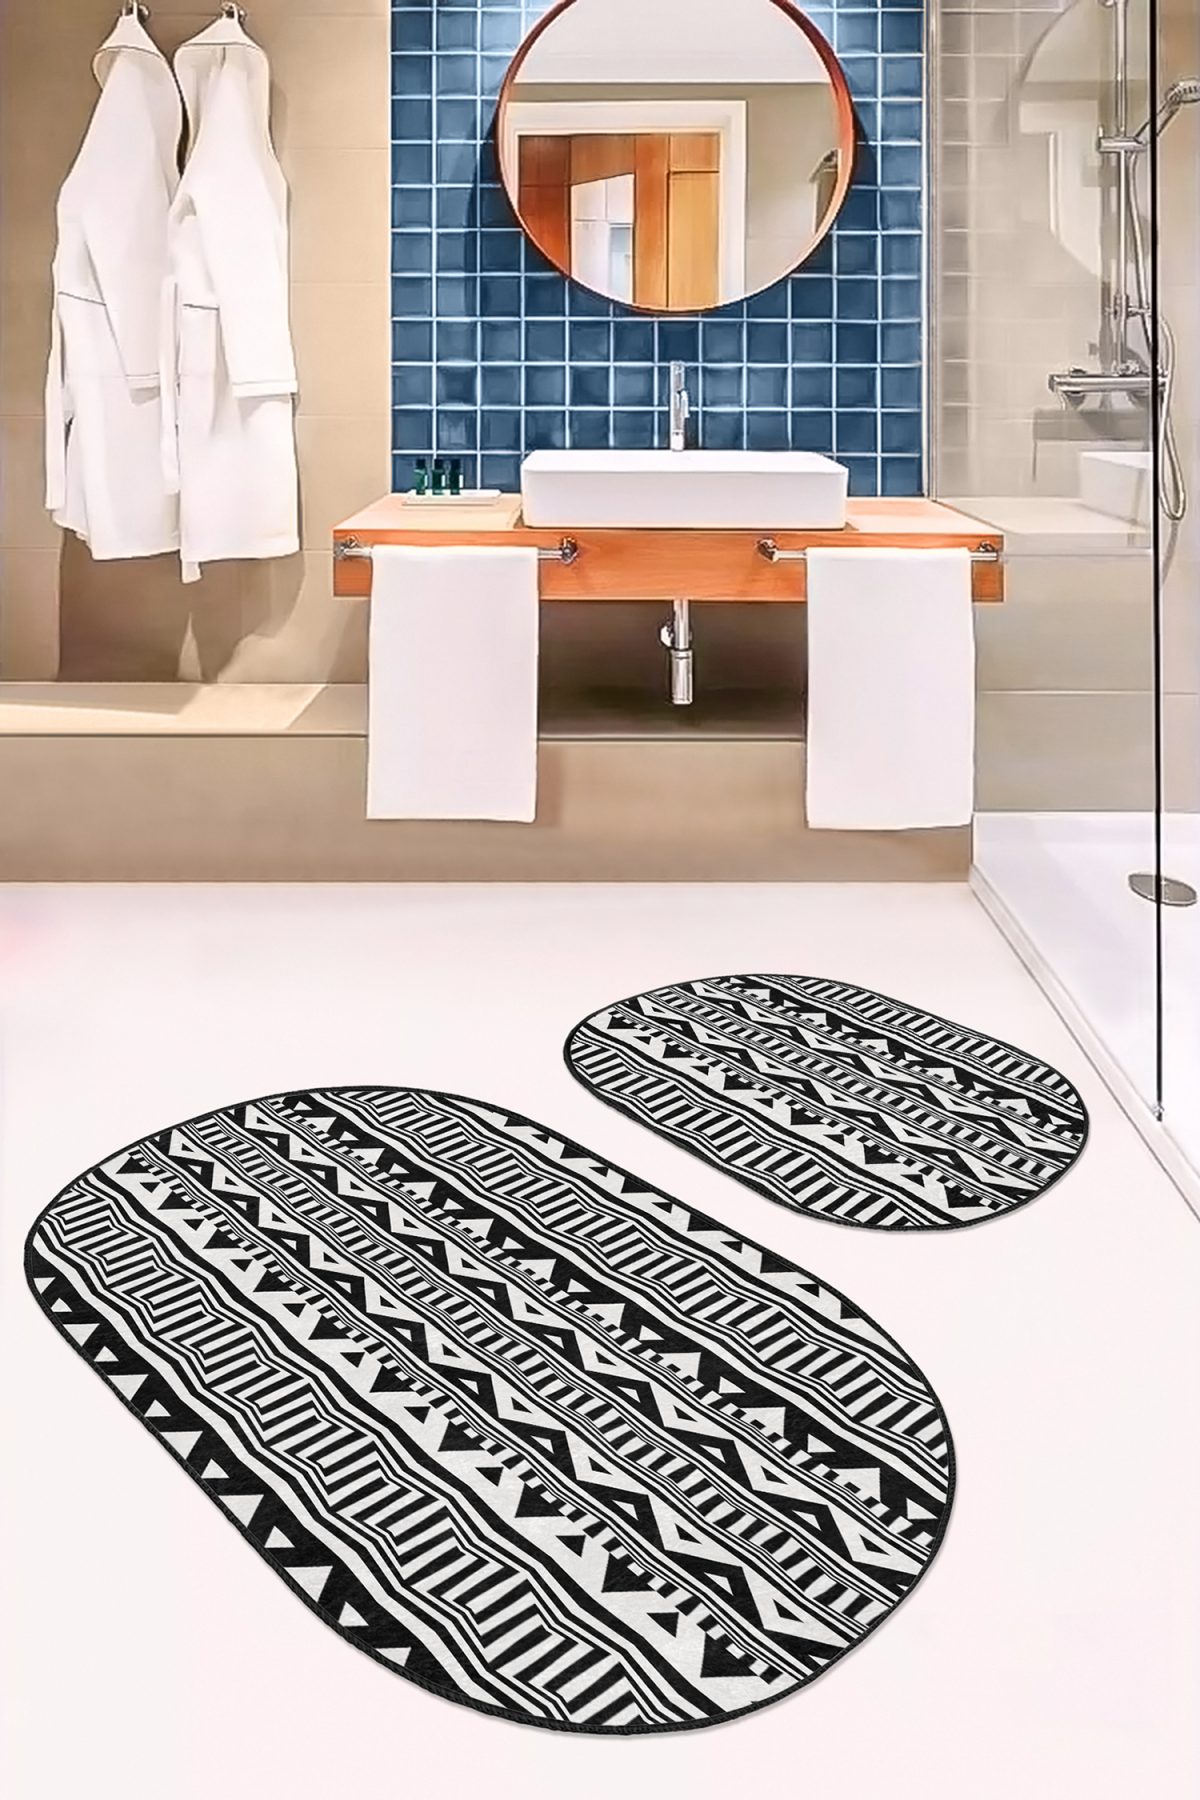 Siyah Beyaz İskandinav Motifli Dijital Baskılı 2'li Oval Kaymaz Tabanlı Banyo & Mutfak Paspas Takımı Realhomes